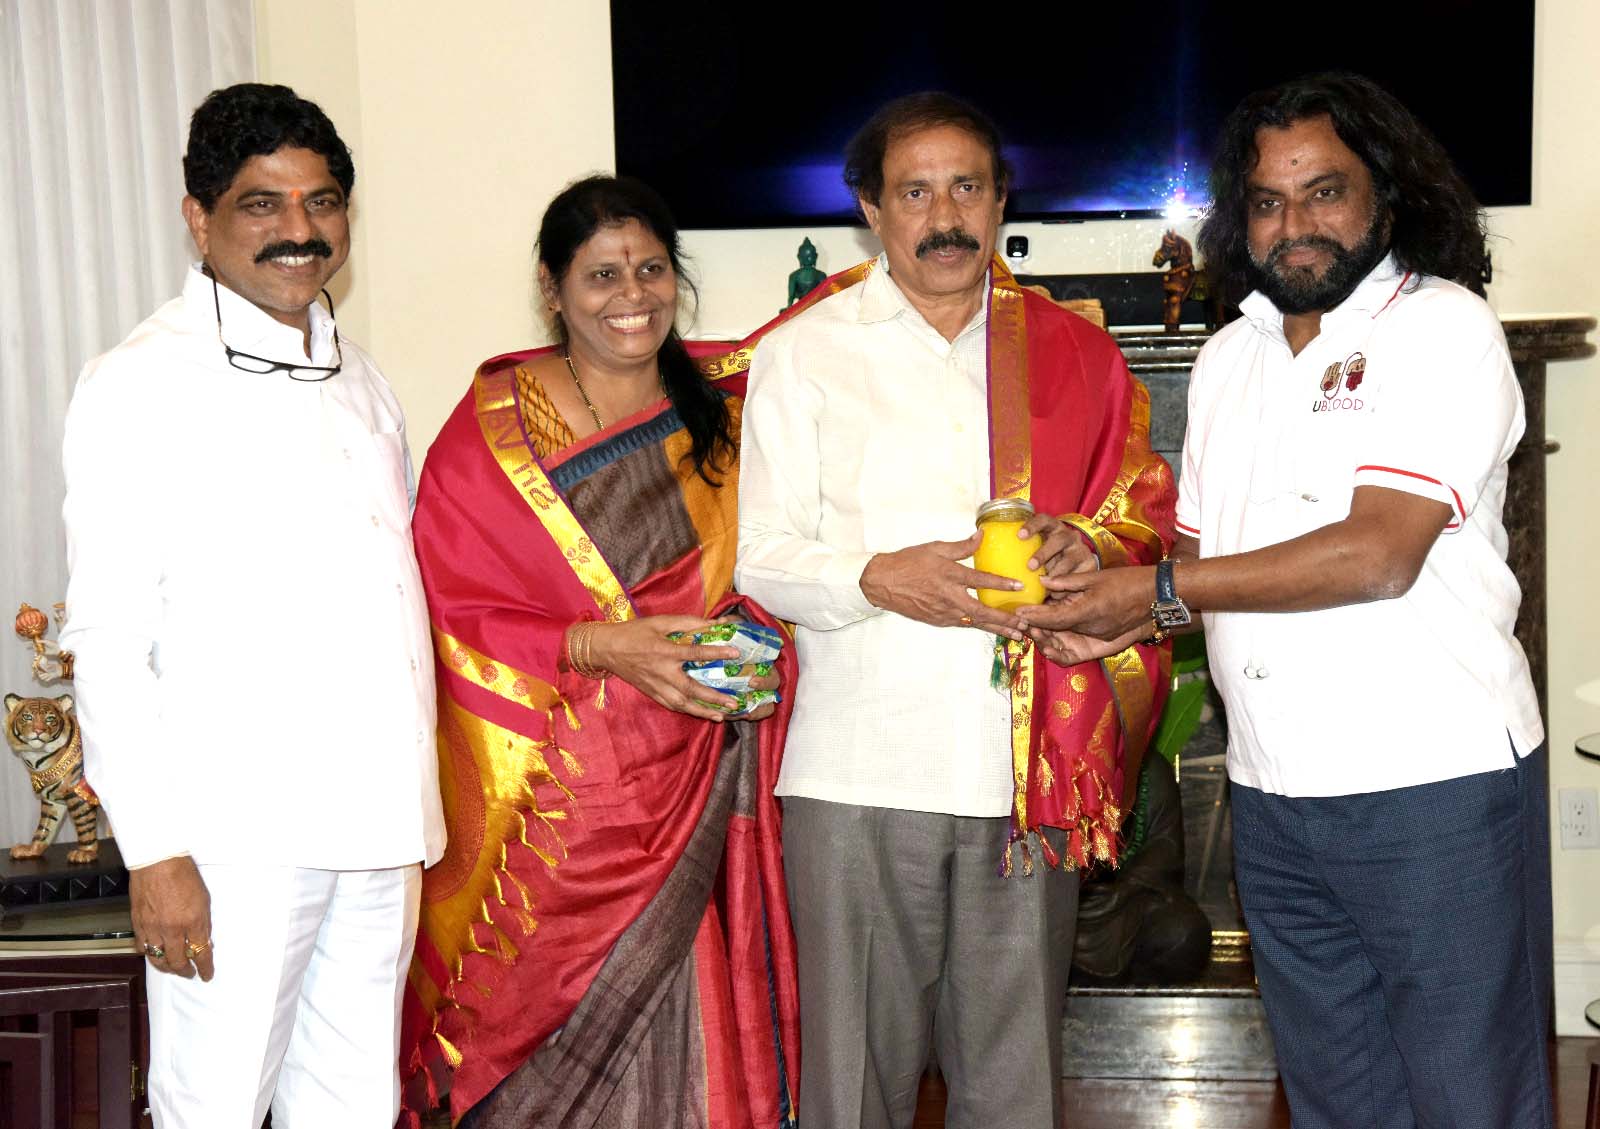 Jai Yalamanchili honors Ramakrishna and his wife